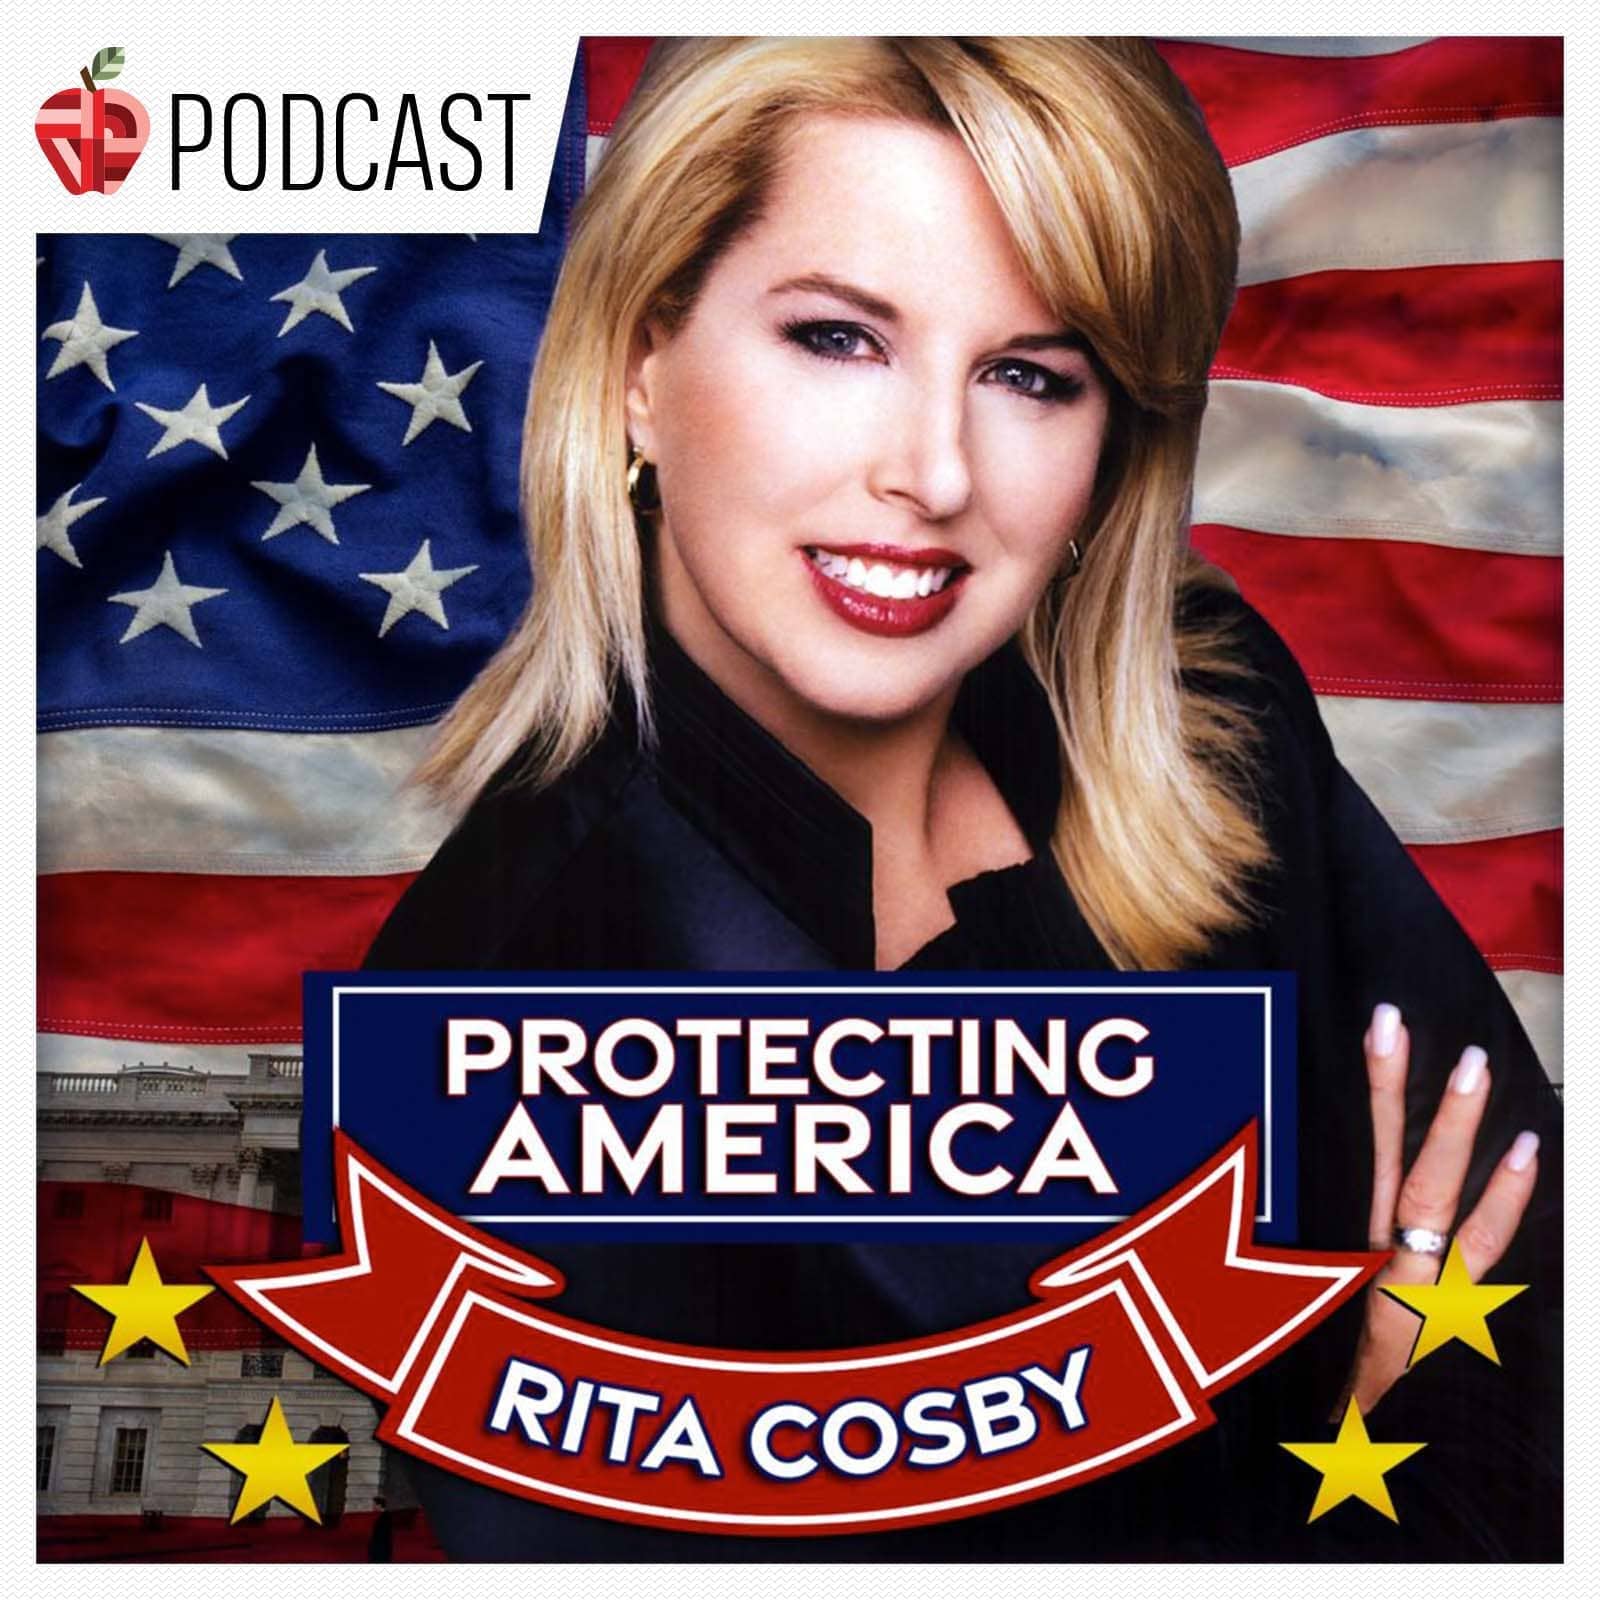 rita-cosby-protecting-america-correct-podcast-new-logo-46